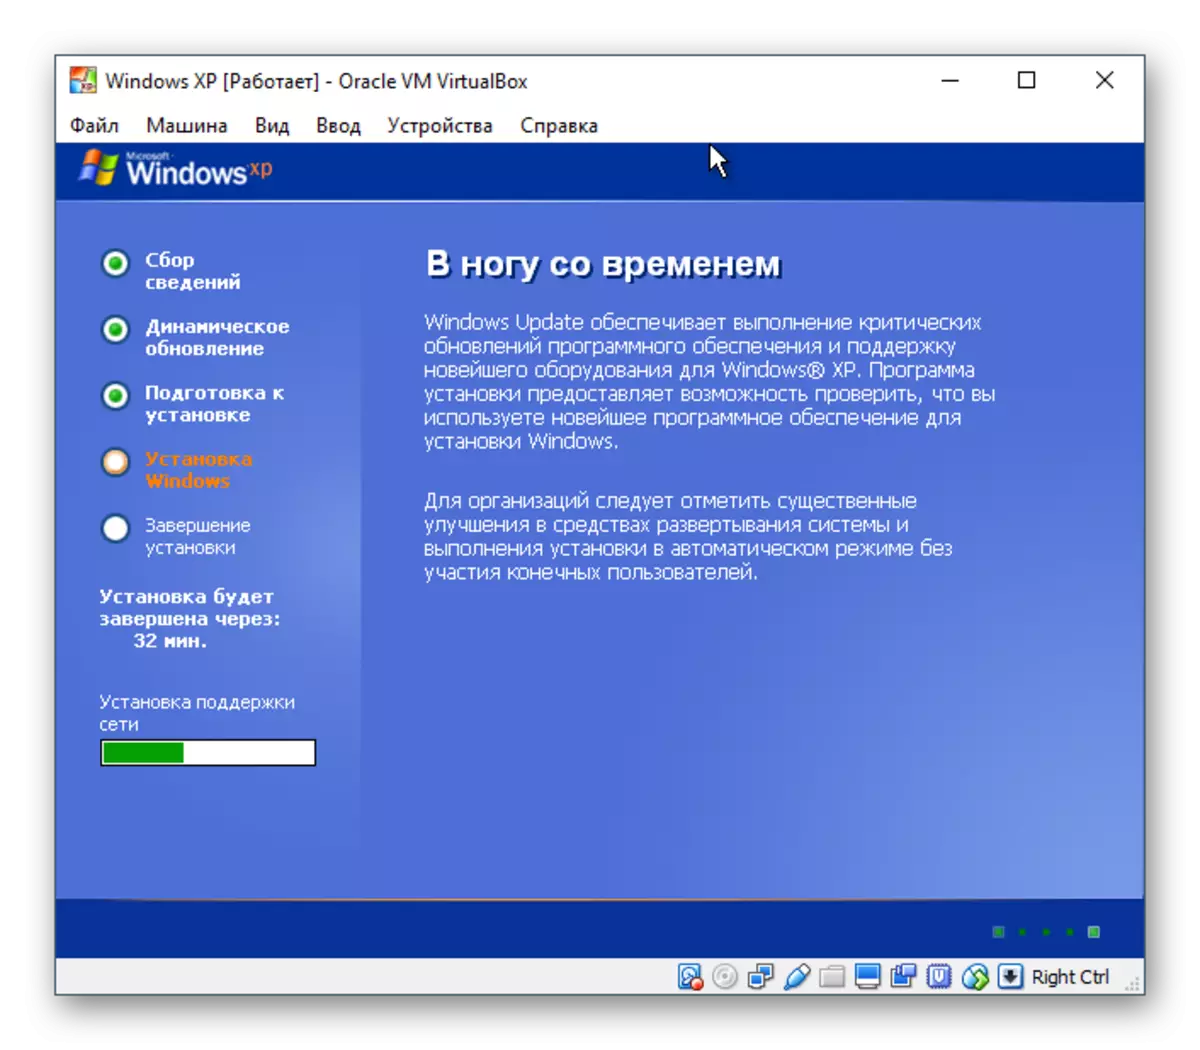 Windows XP network settings in VirtualBox